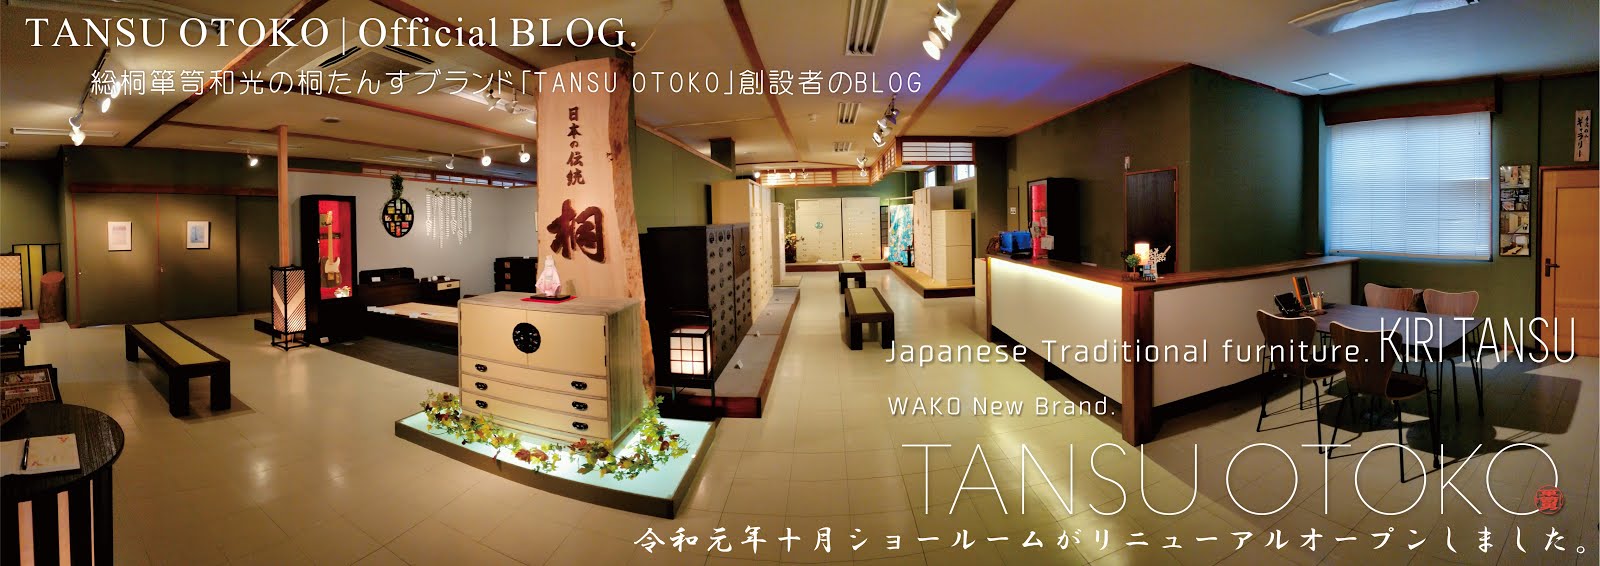 TANSU OTOKO | official BLOG.